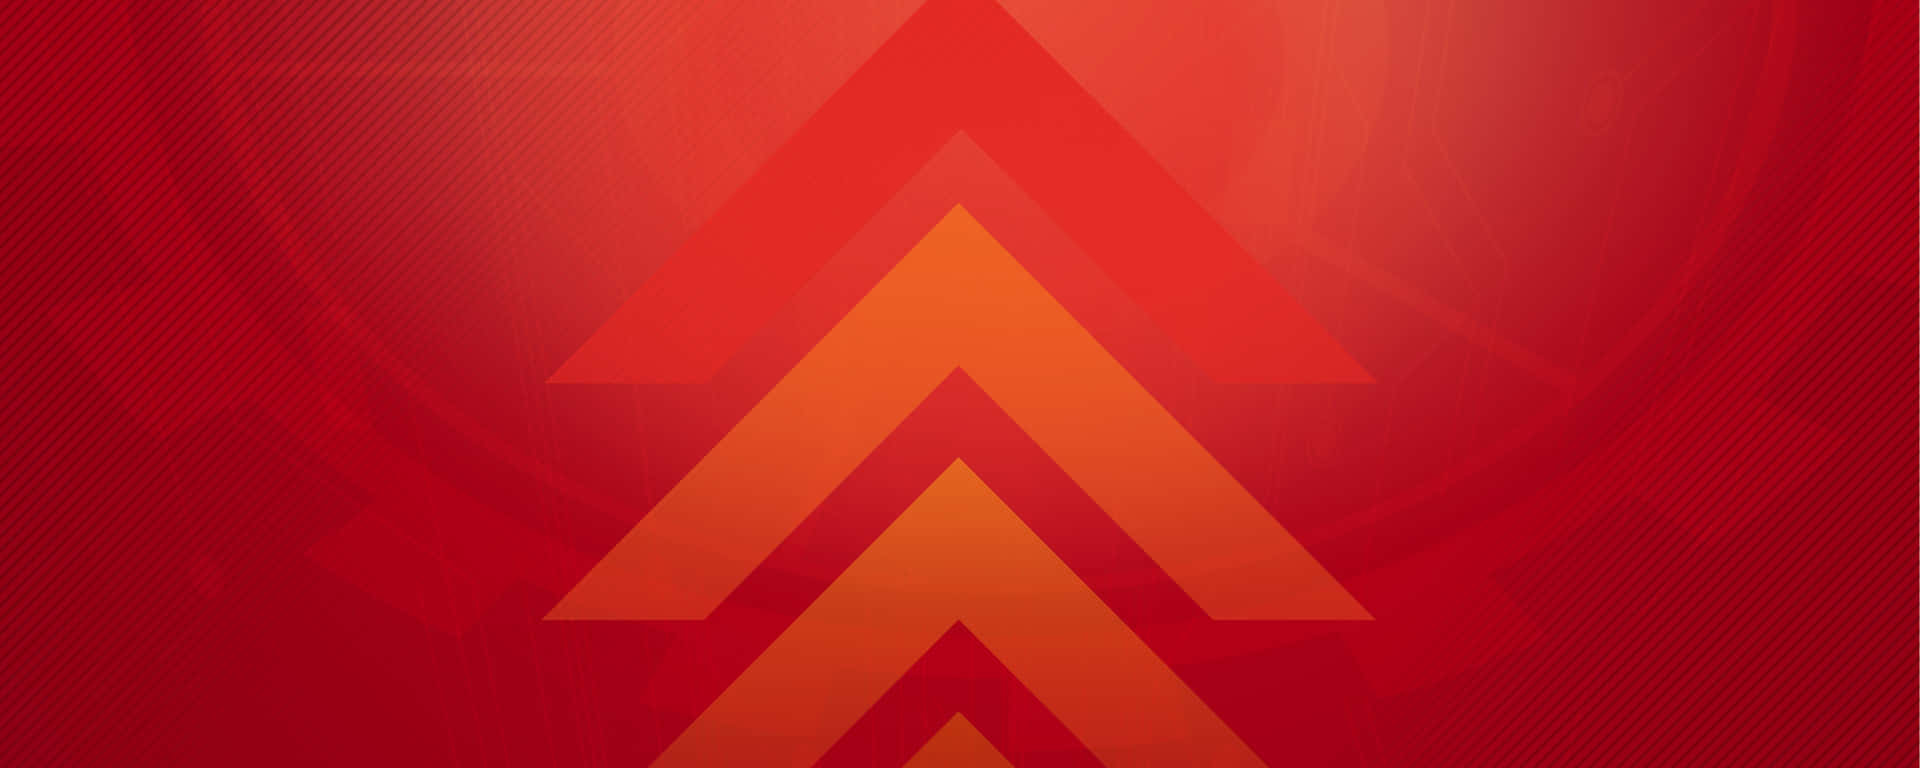 A Red And Orange Arrow Logo Wallpaper